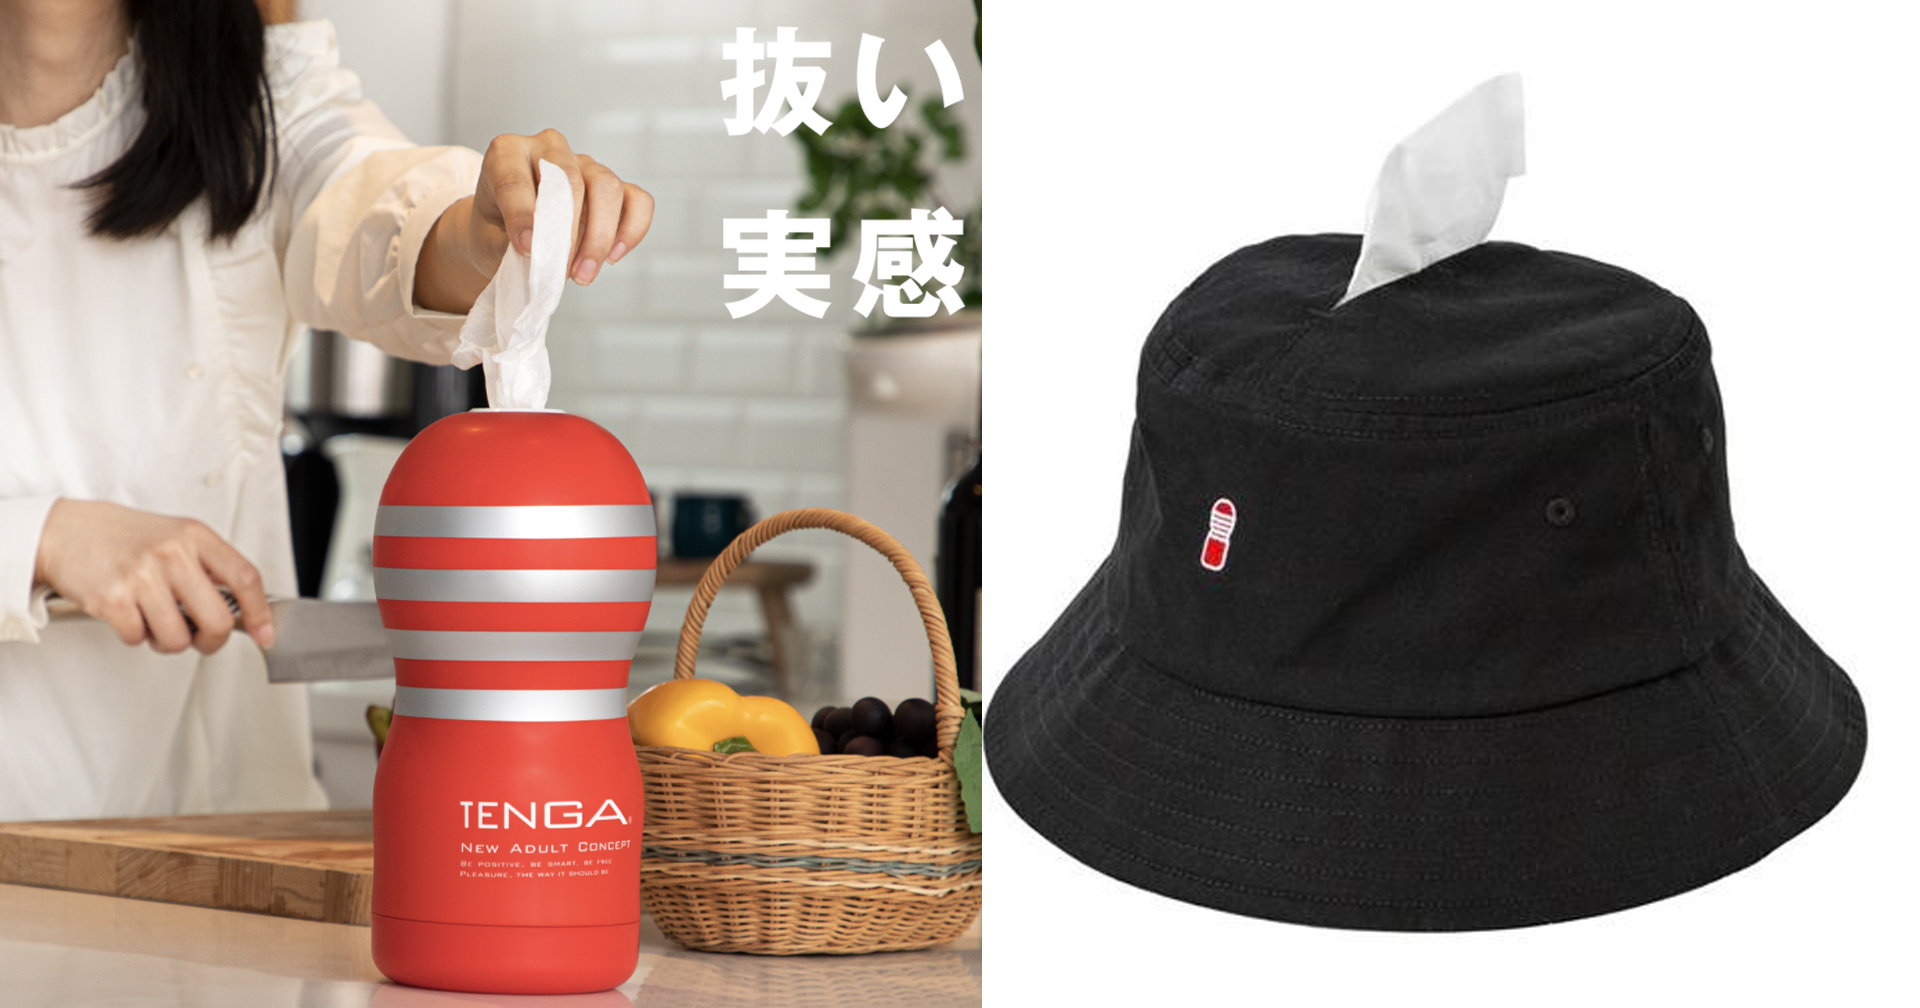 TENGA ออกผลิตภัณฑ์กล่องและหมวกใส่ทิชชู